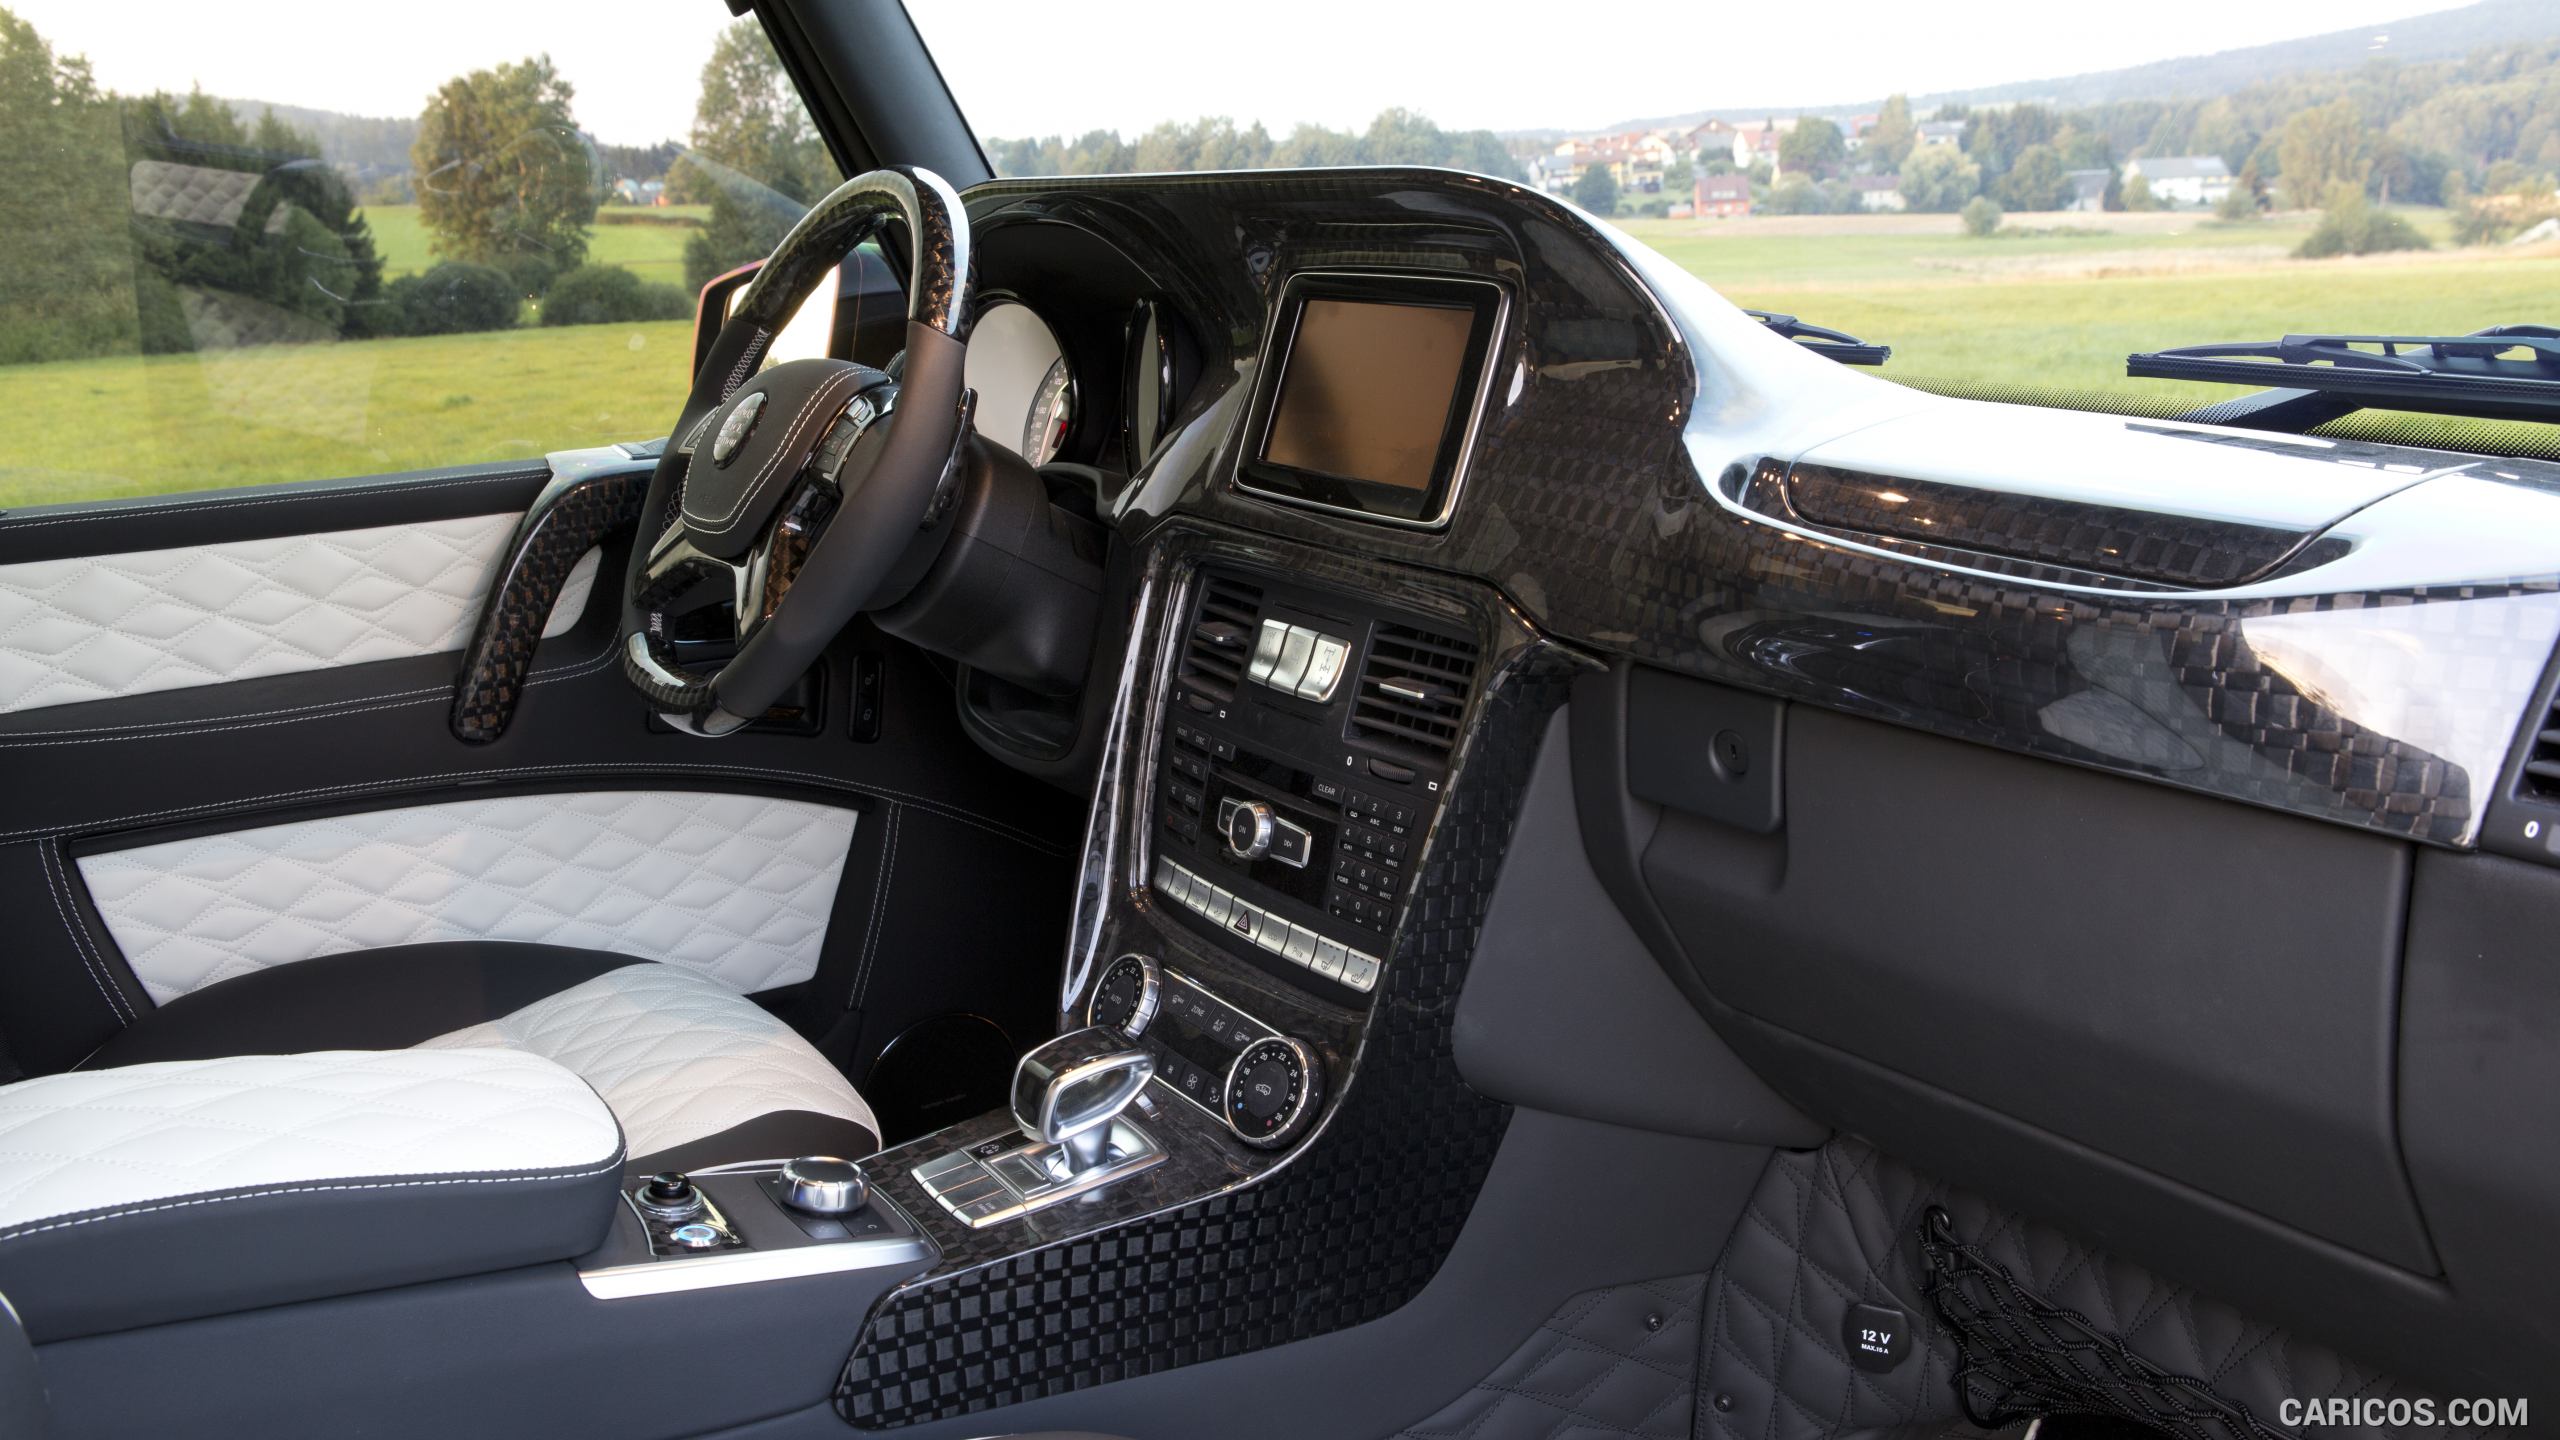 2016 MANSORY GRONOS Black Edition based on Mercedes G63 AMG - Interior, #13 of 16